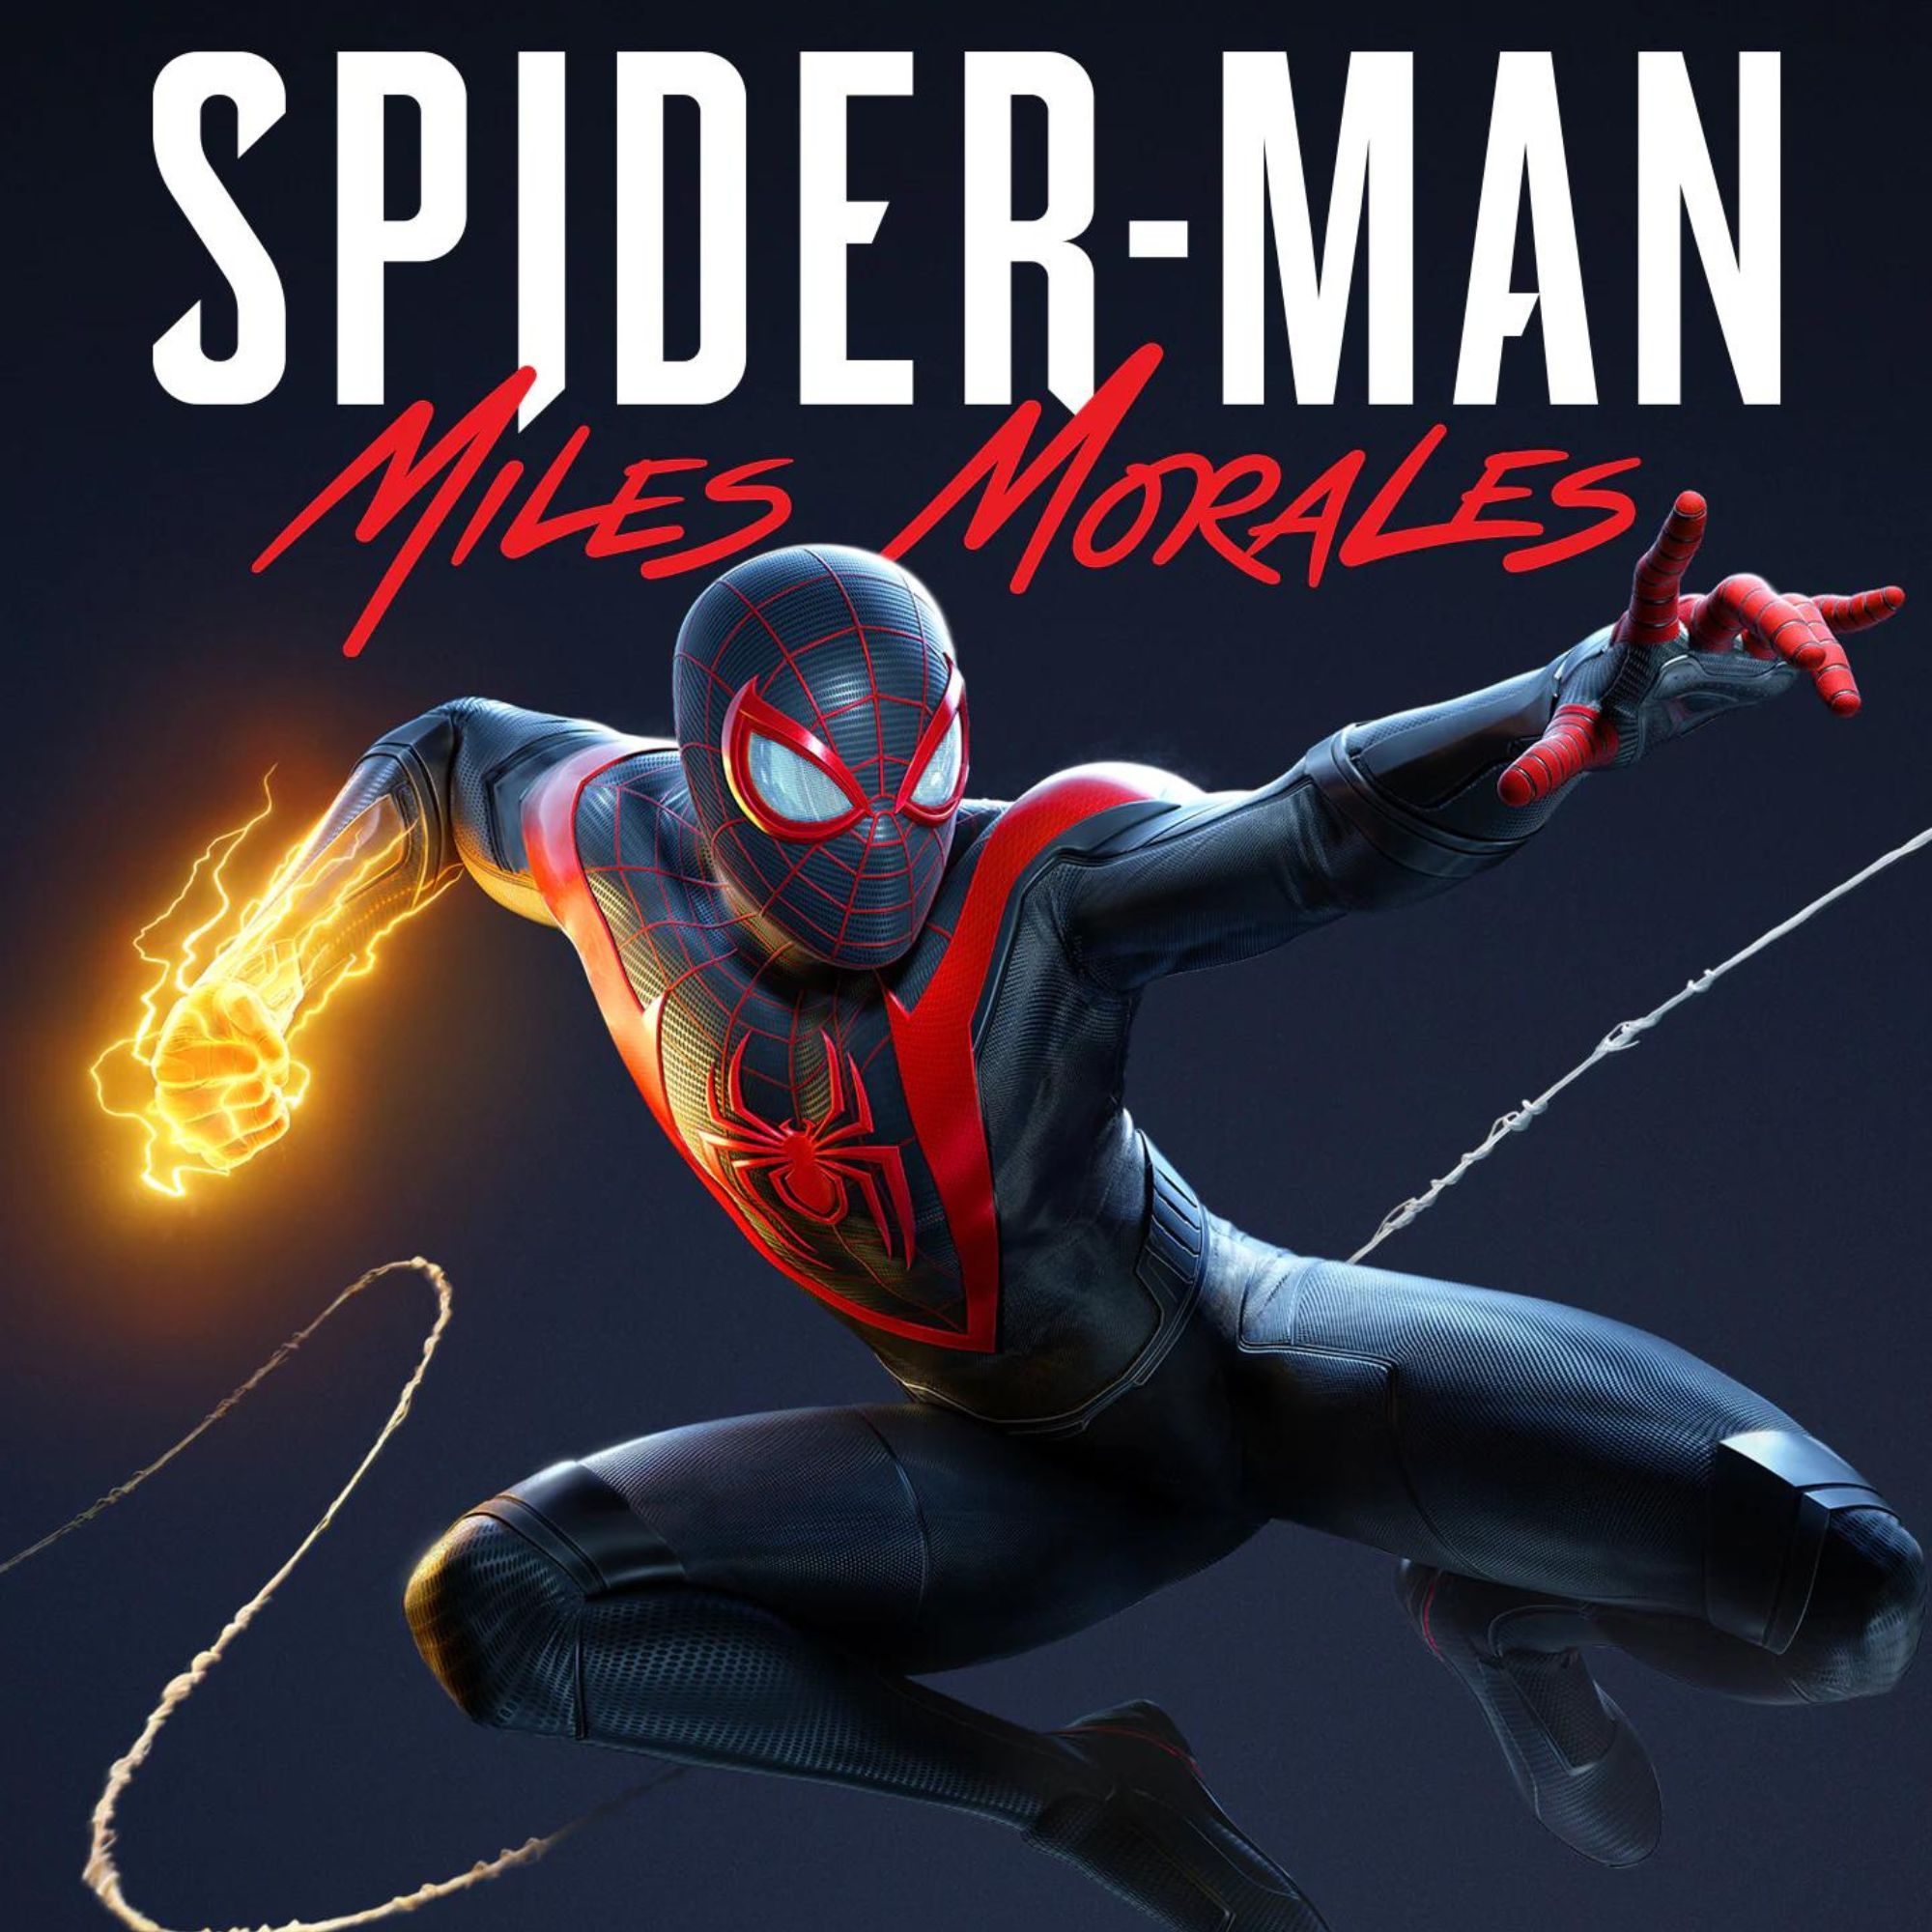 Product tile of Marvel's Spider-Man: Miles Morales showing the web-slinger swinging on a dark background